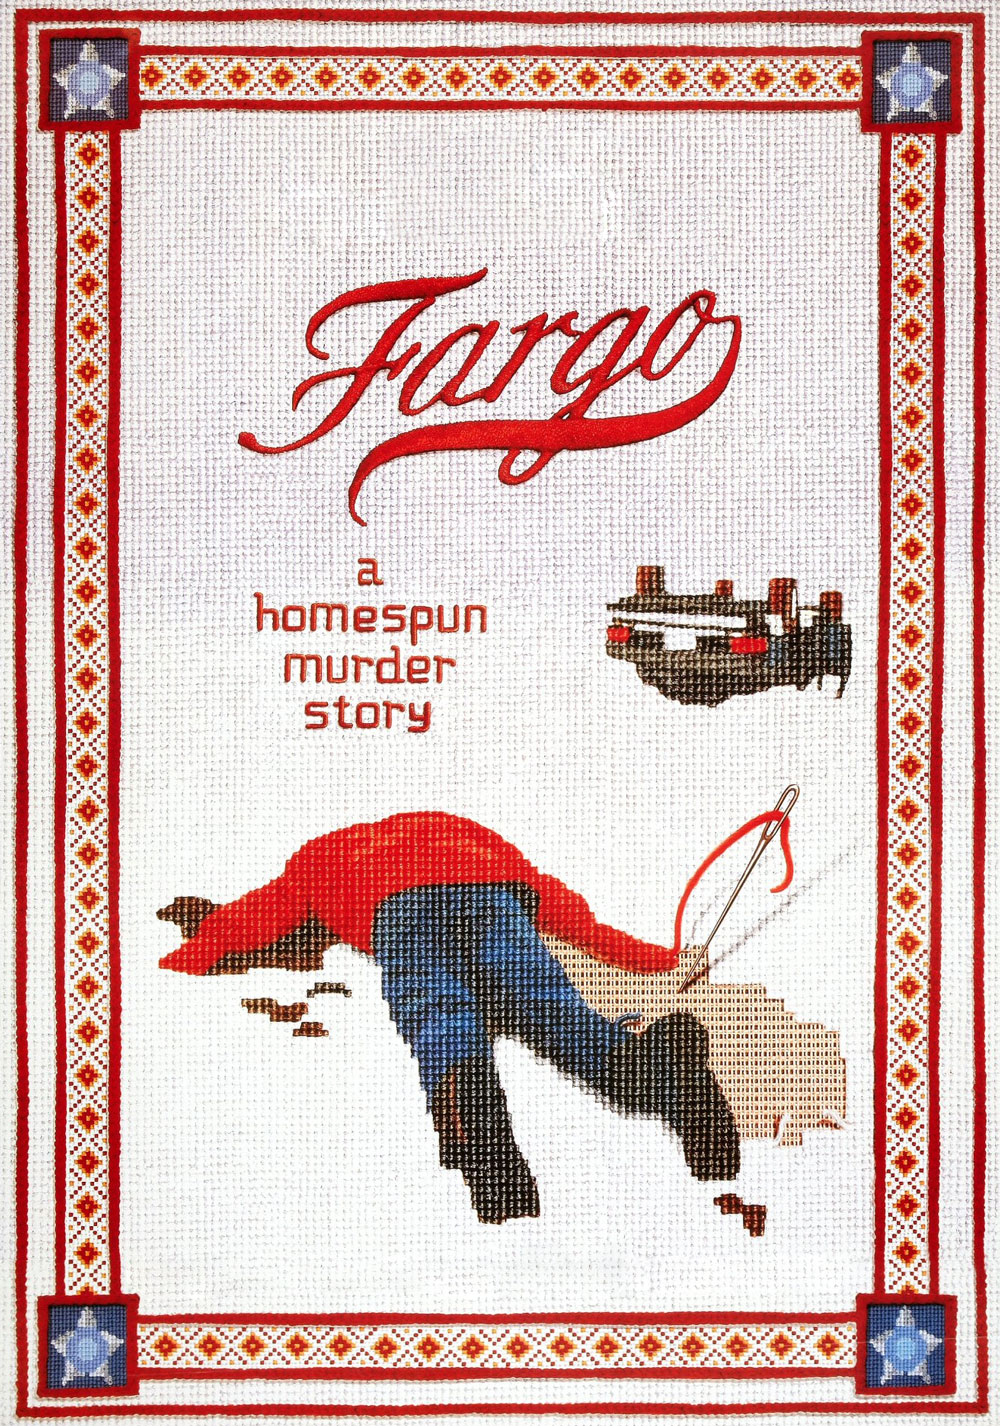 Fargo Picture